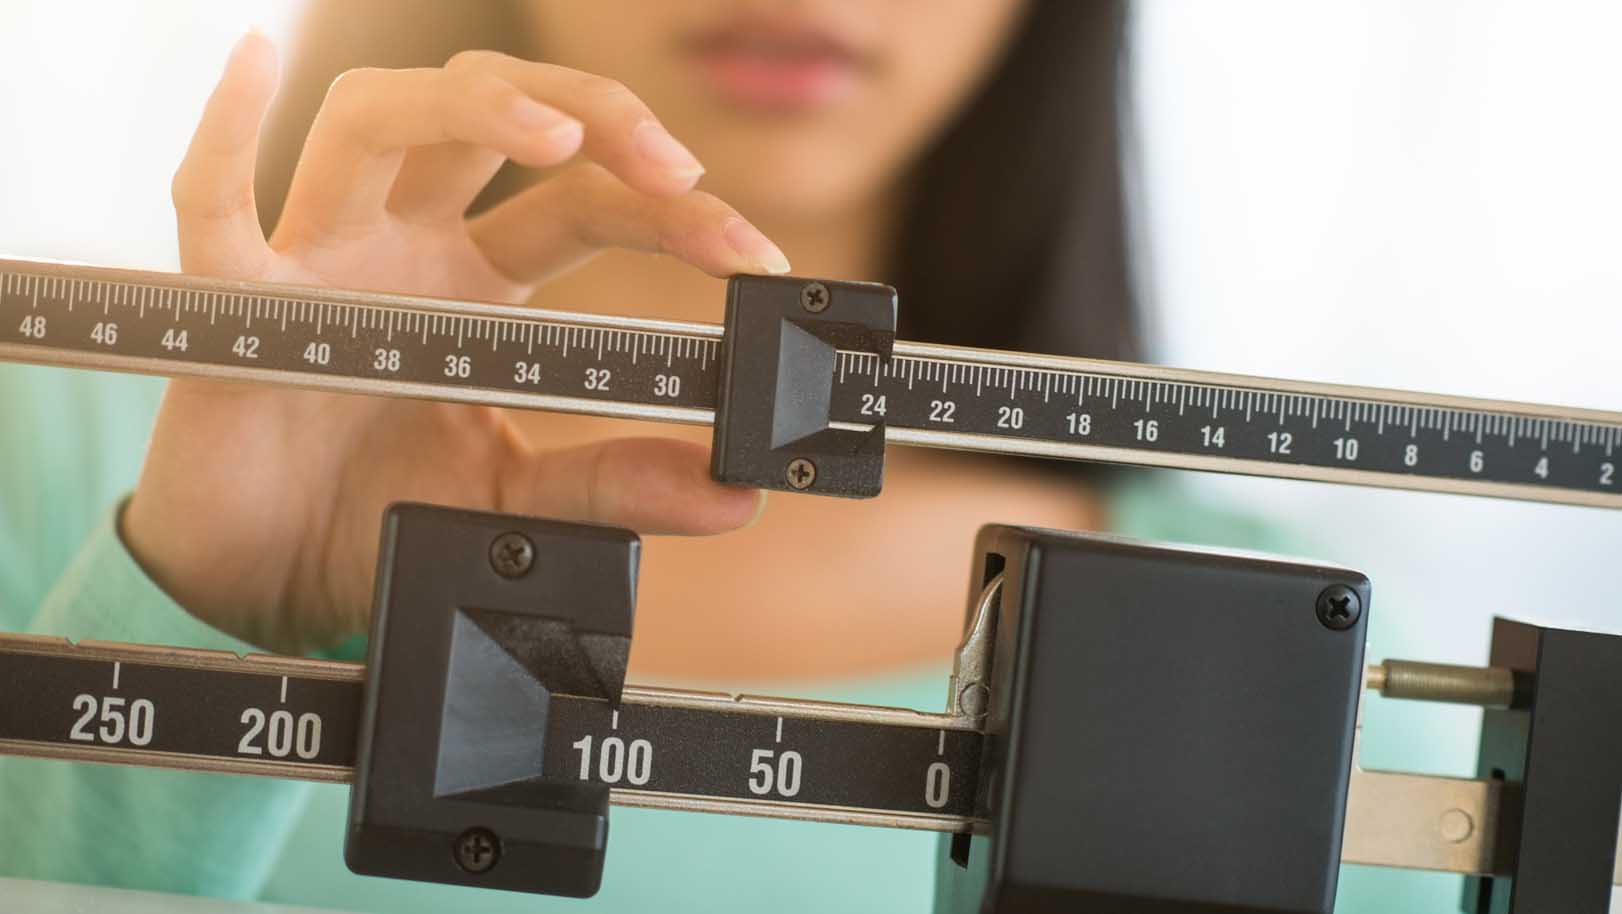 Unlocking the Secrets of Weight Loss